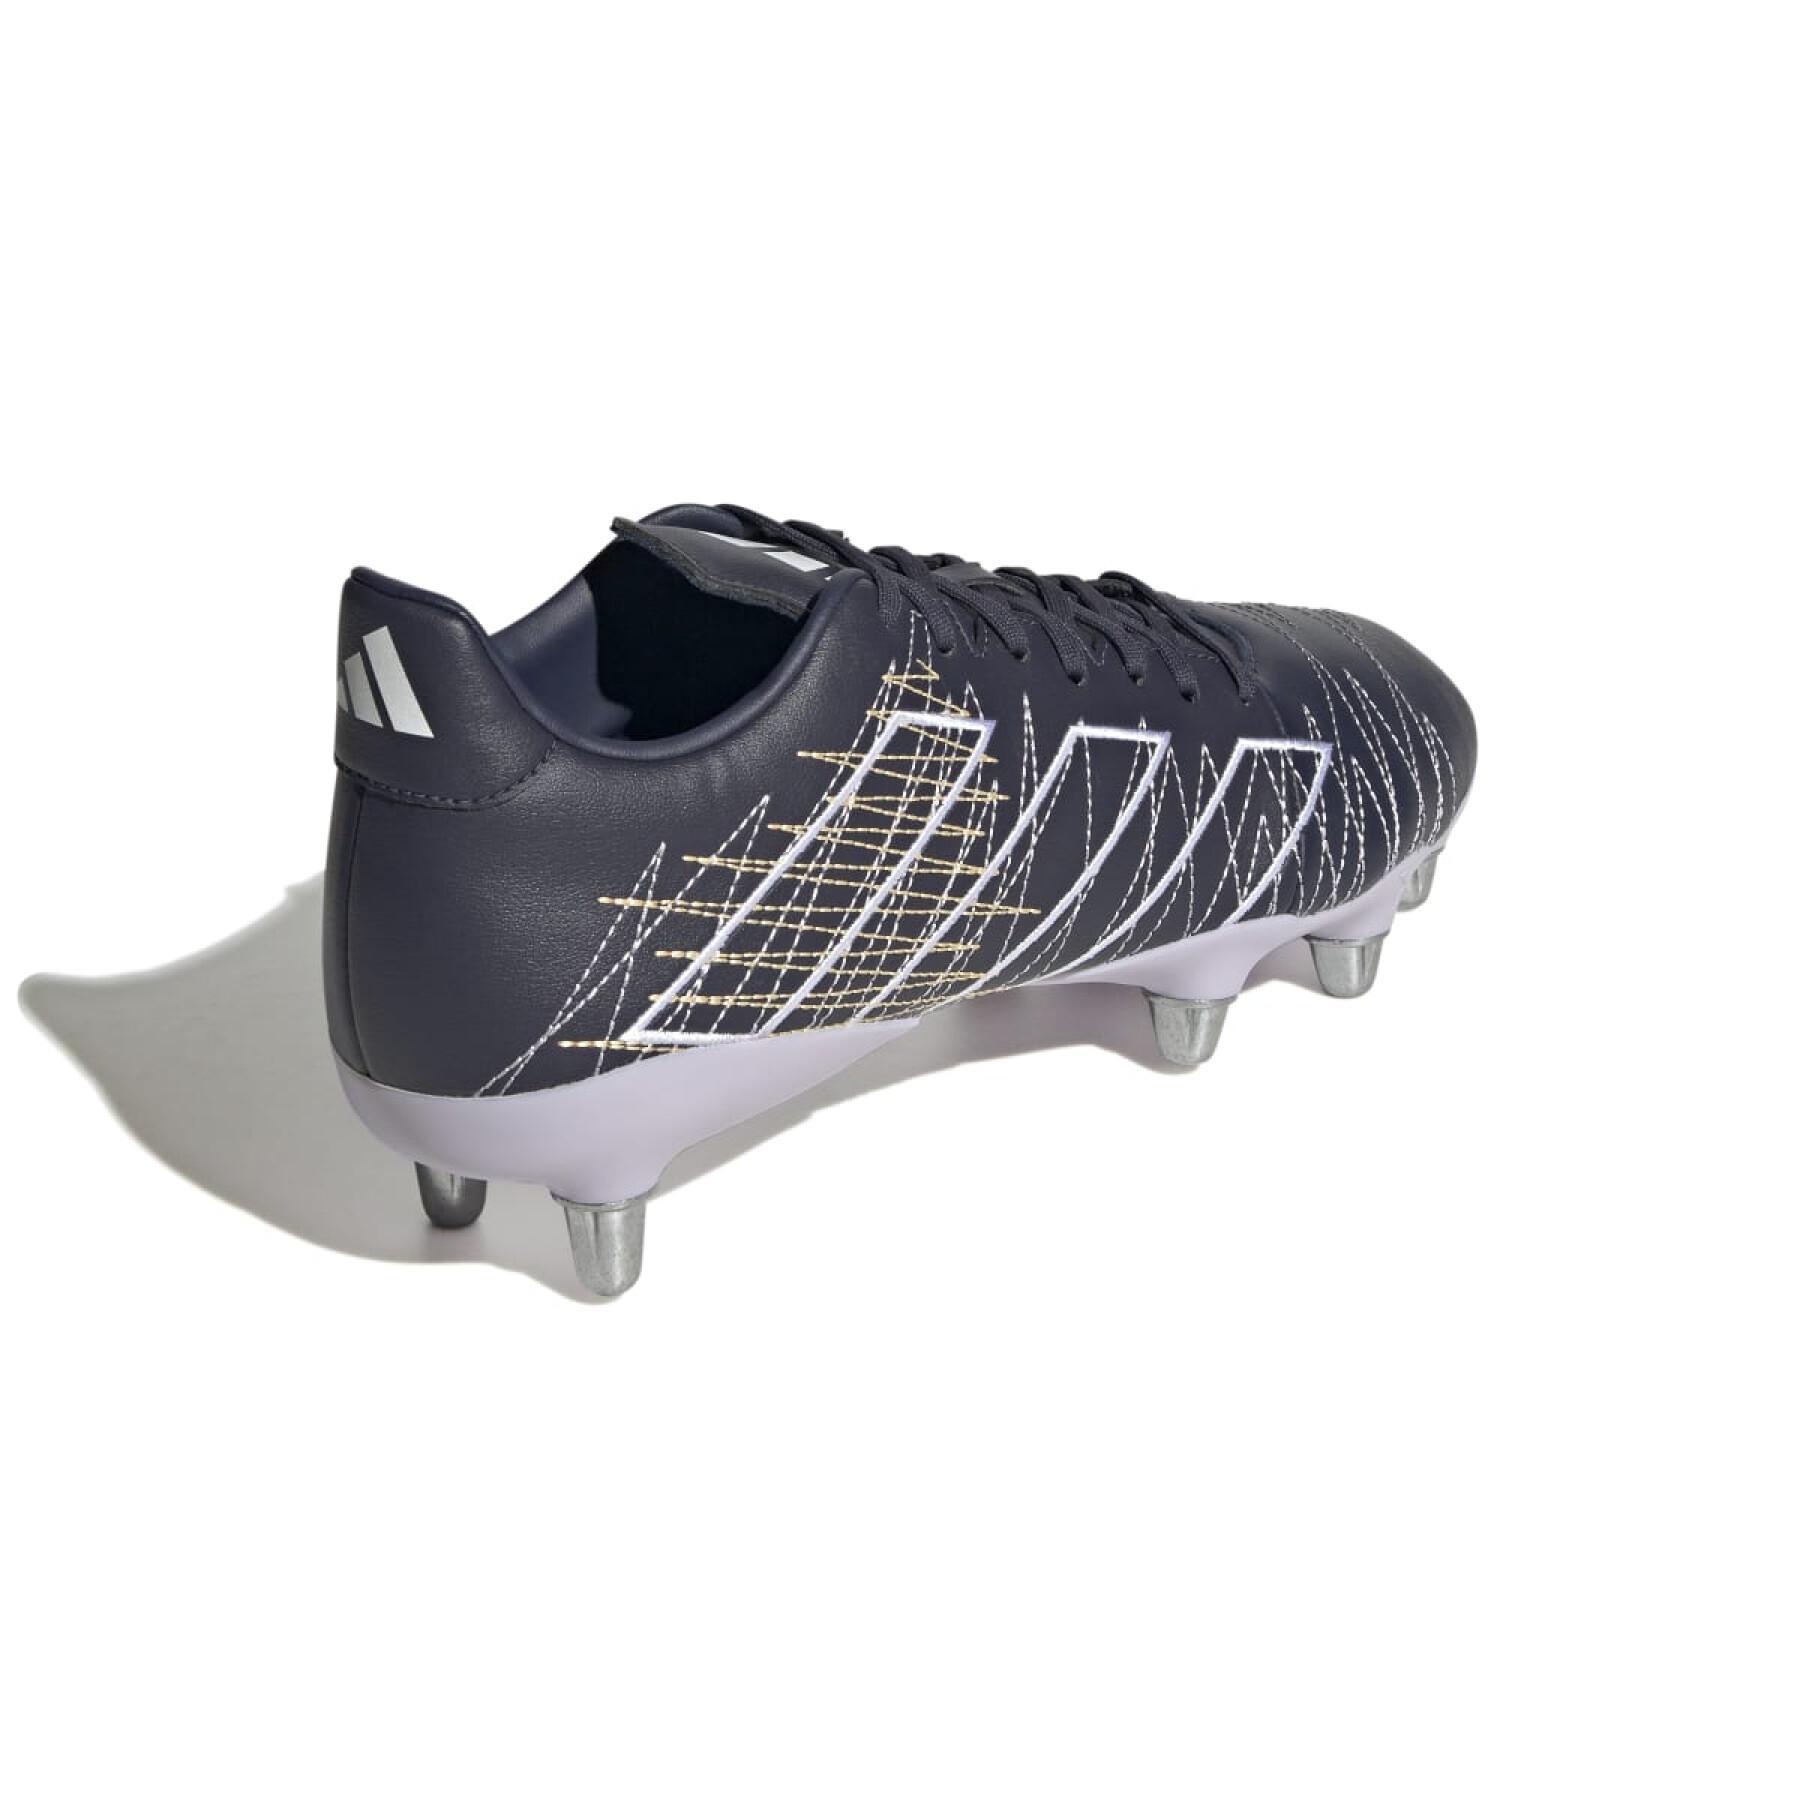 Chaussures de rugby adidas Kakari.SG